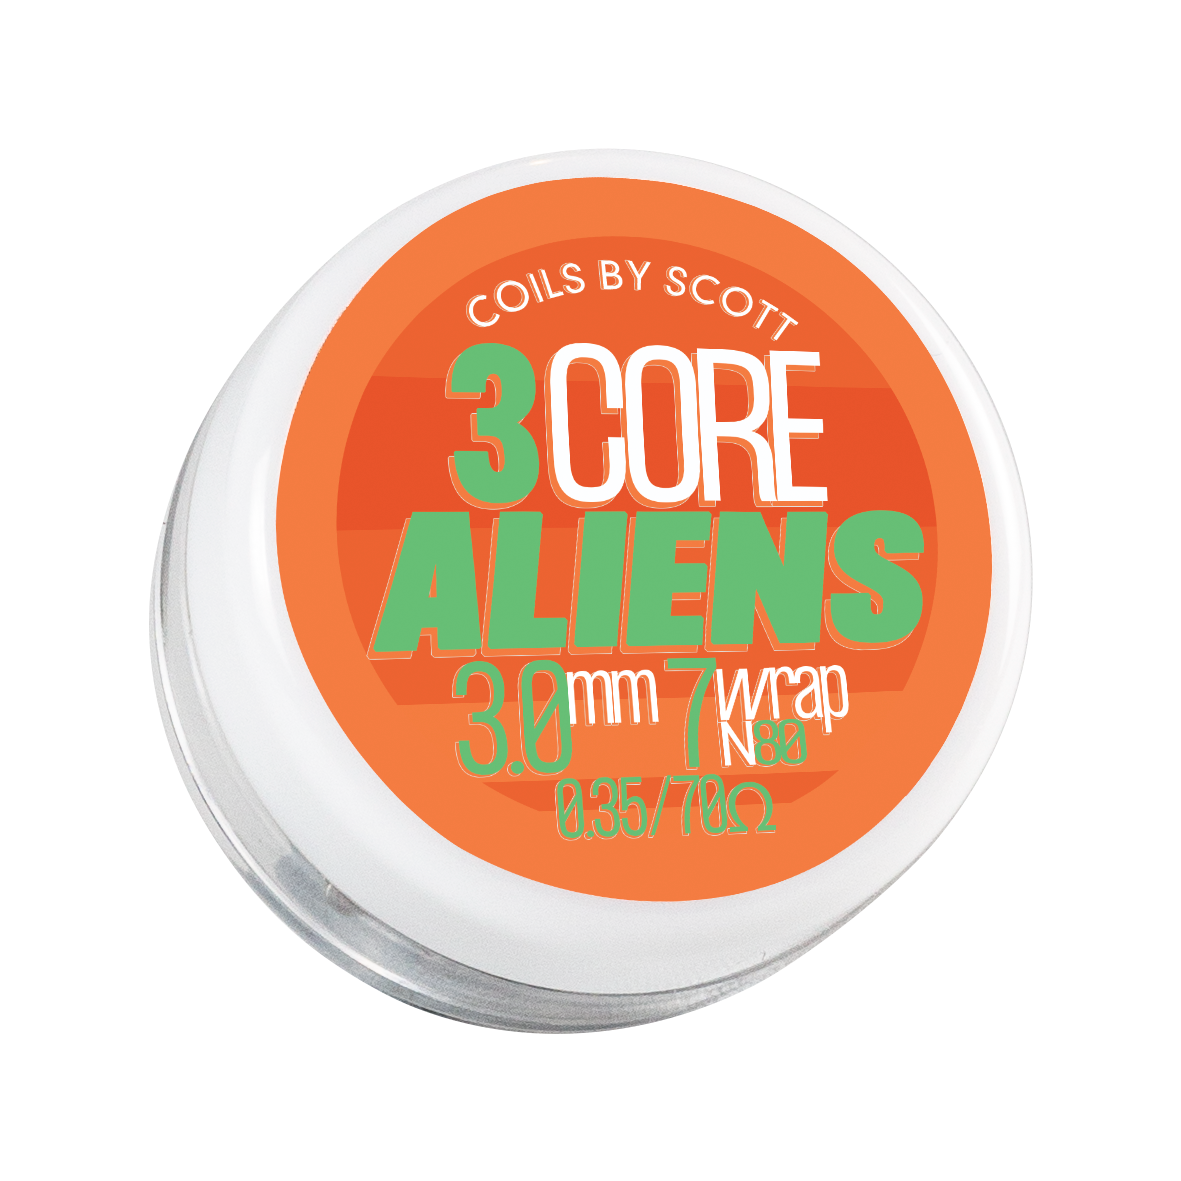 0.35 3 Core Aliens